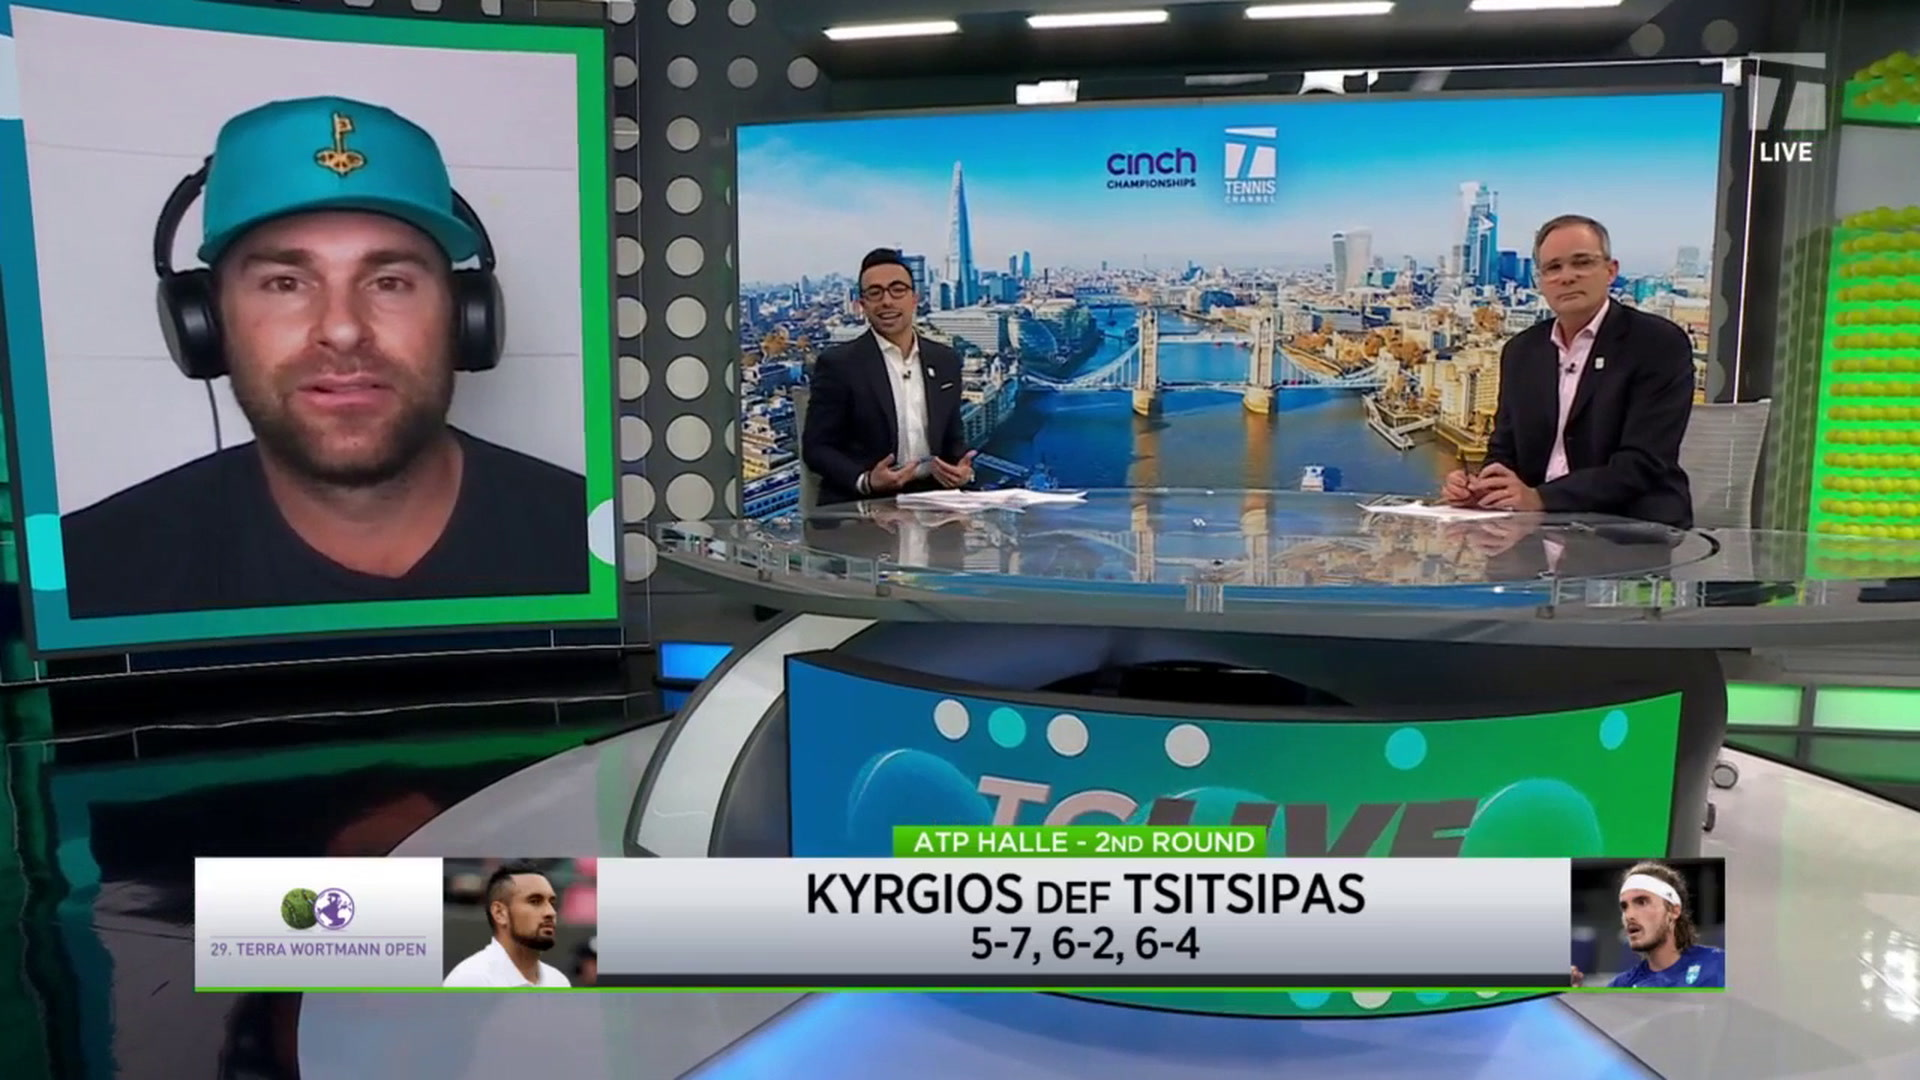 Tennis Channel Live Kyrgios upsets Tsitsipas in Halle Tennis